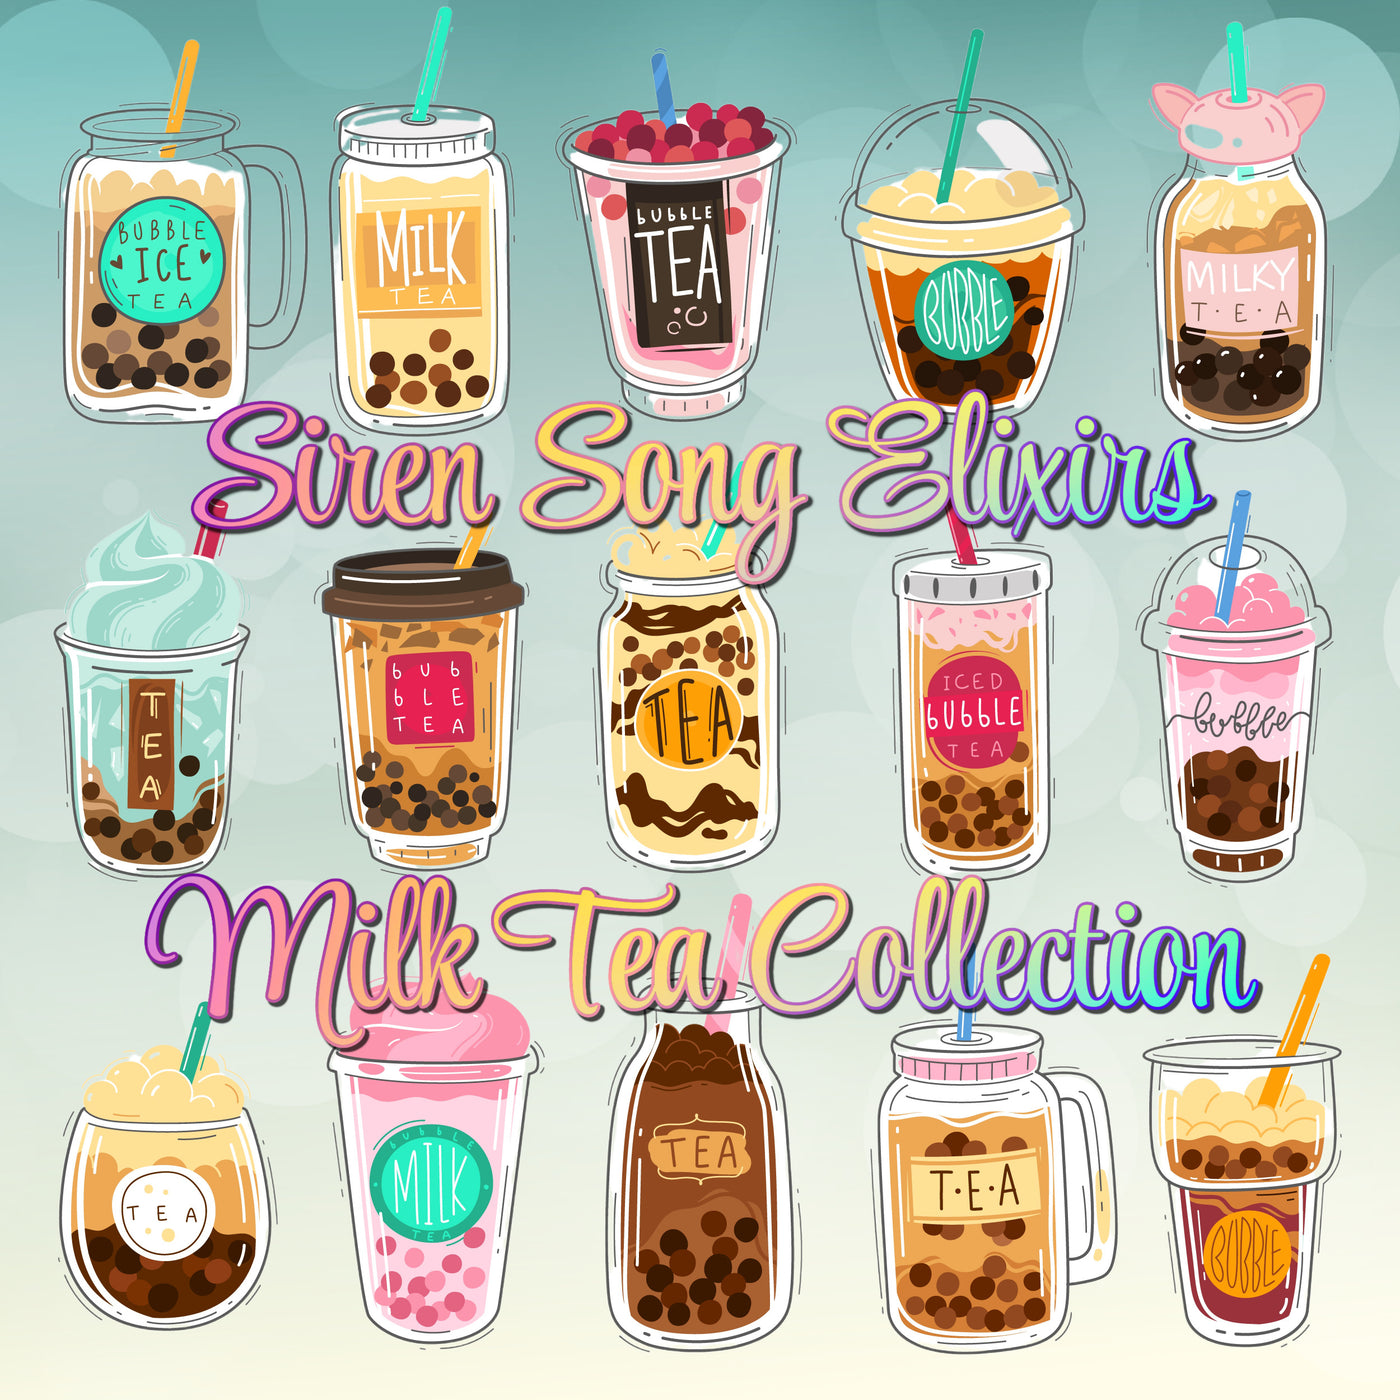 Milk Tea Sample Collection - 17 samples